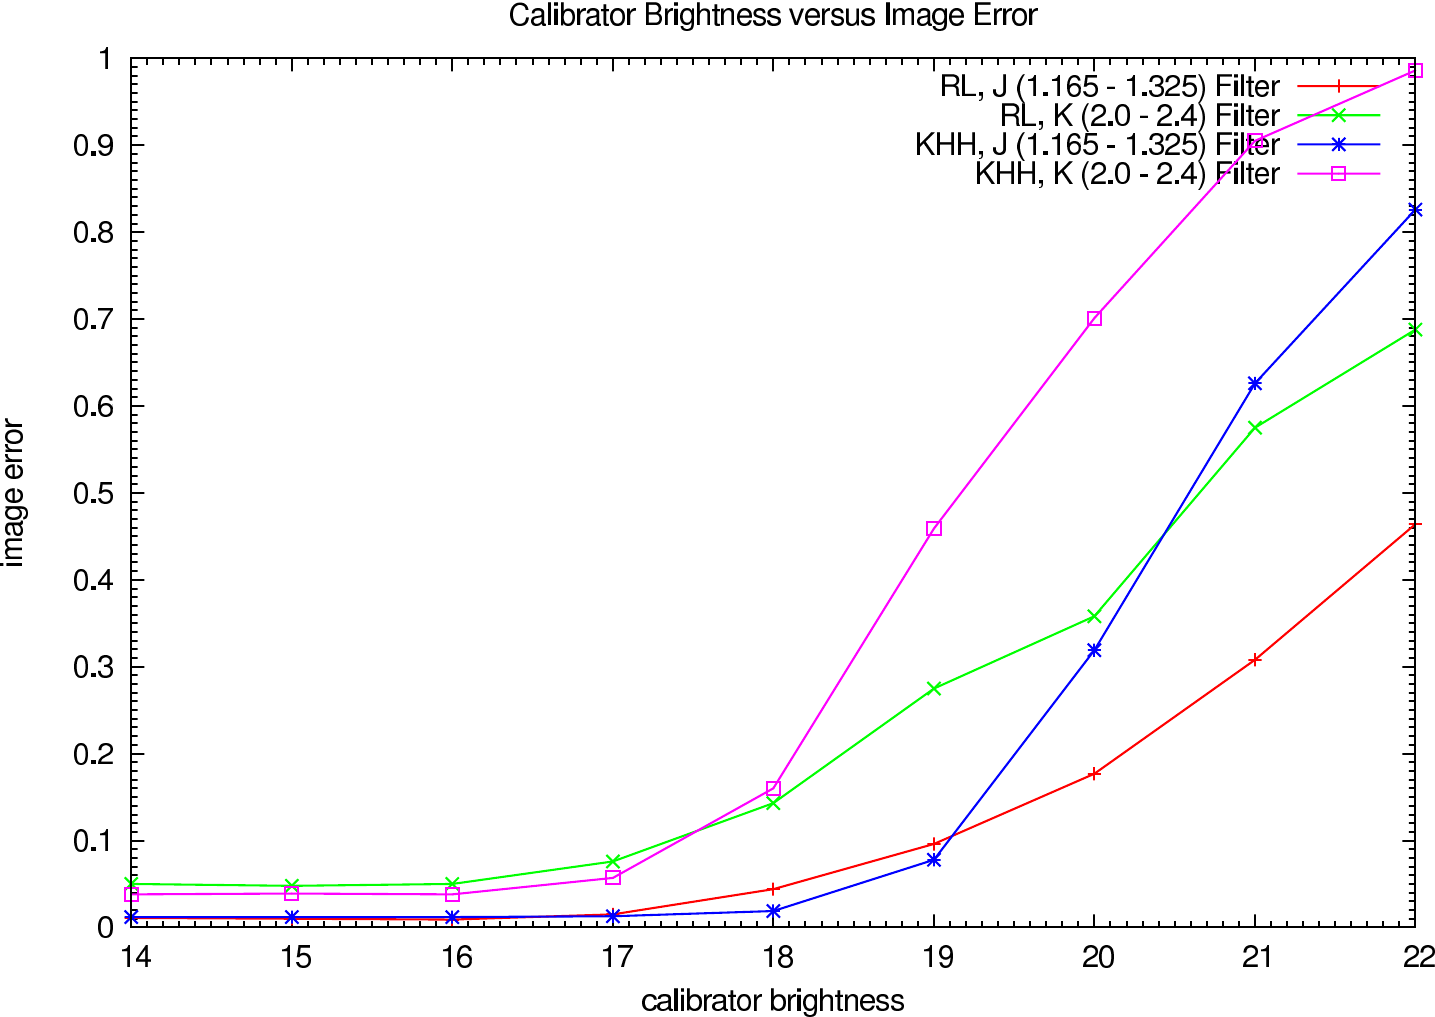 Image errors depending on the calibrator brightness